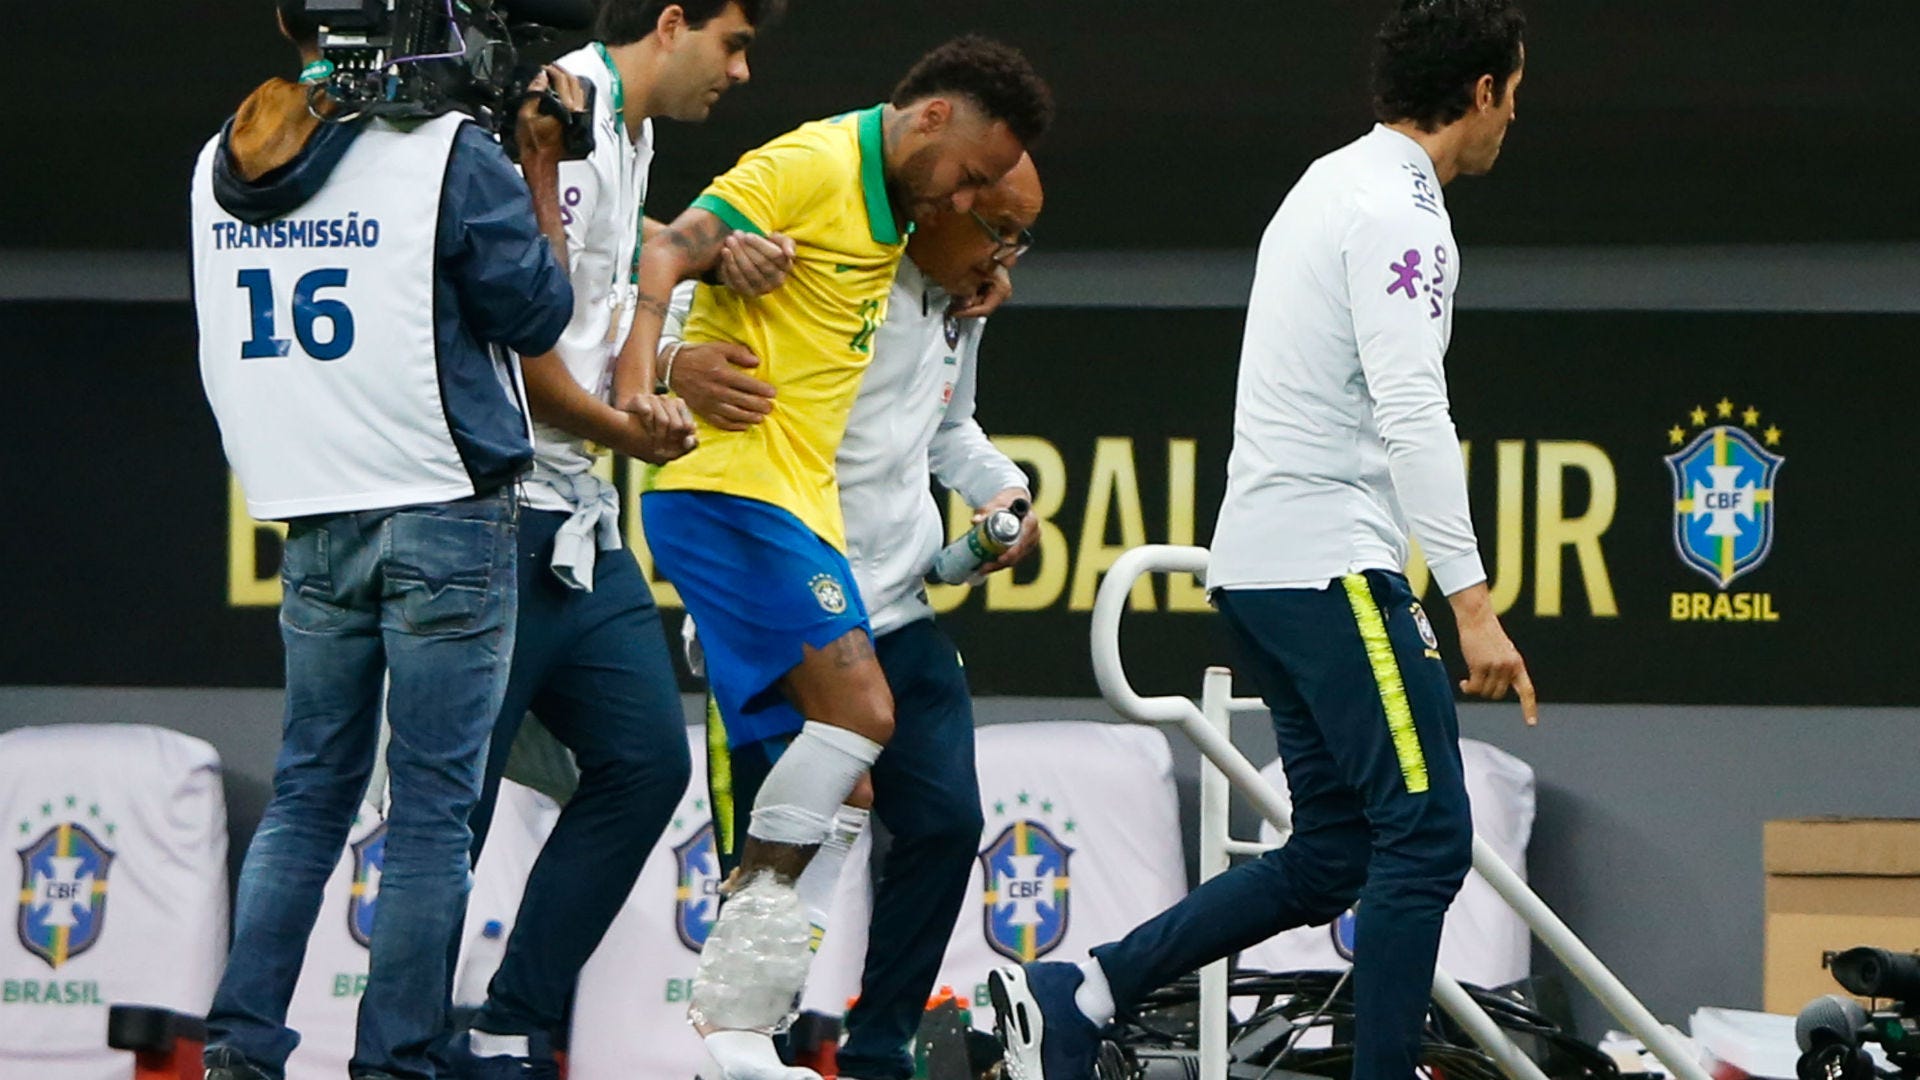 Neymar Brazil Qatar friendly 2019